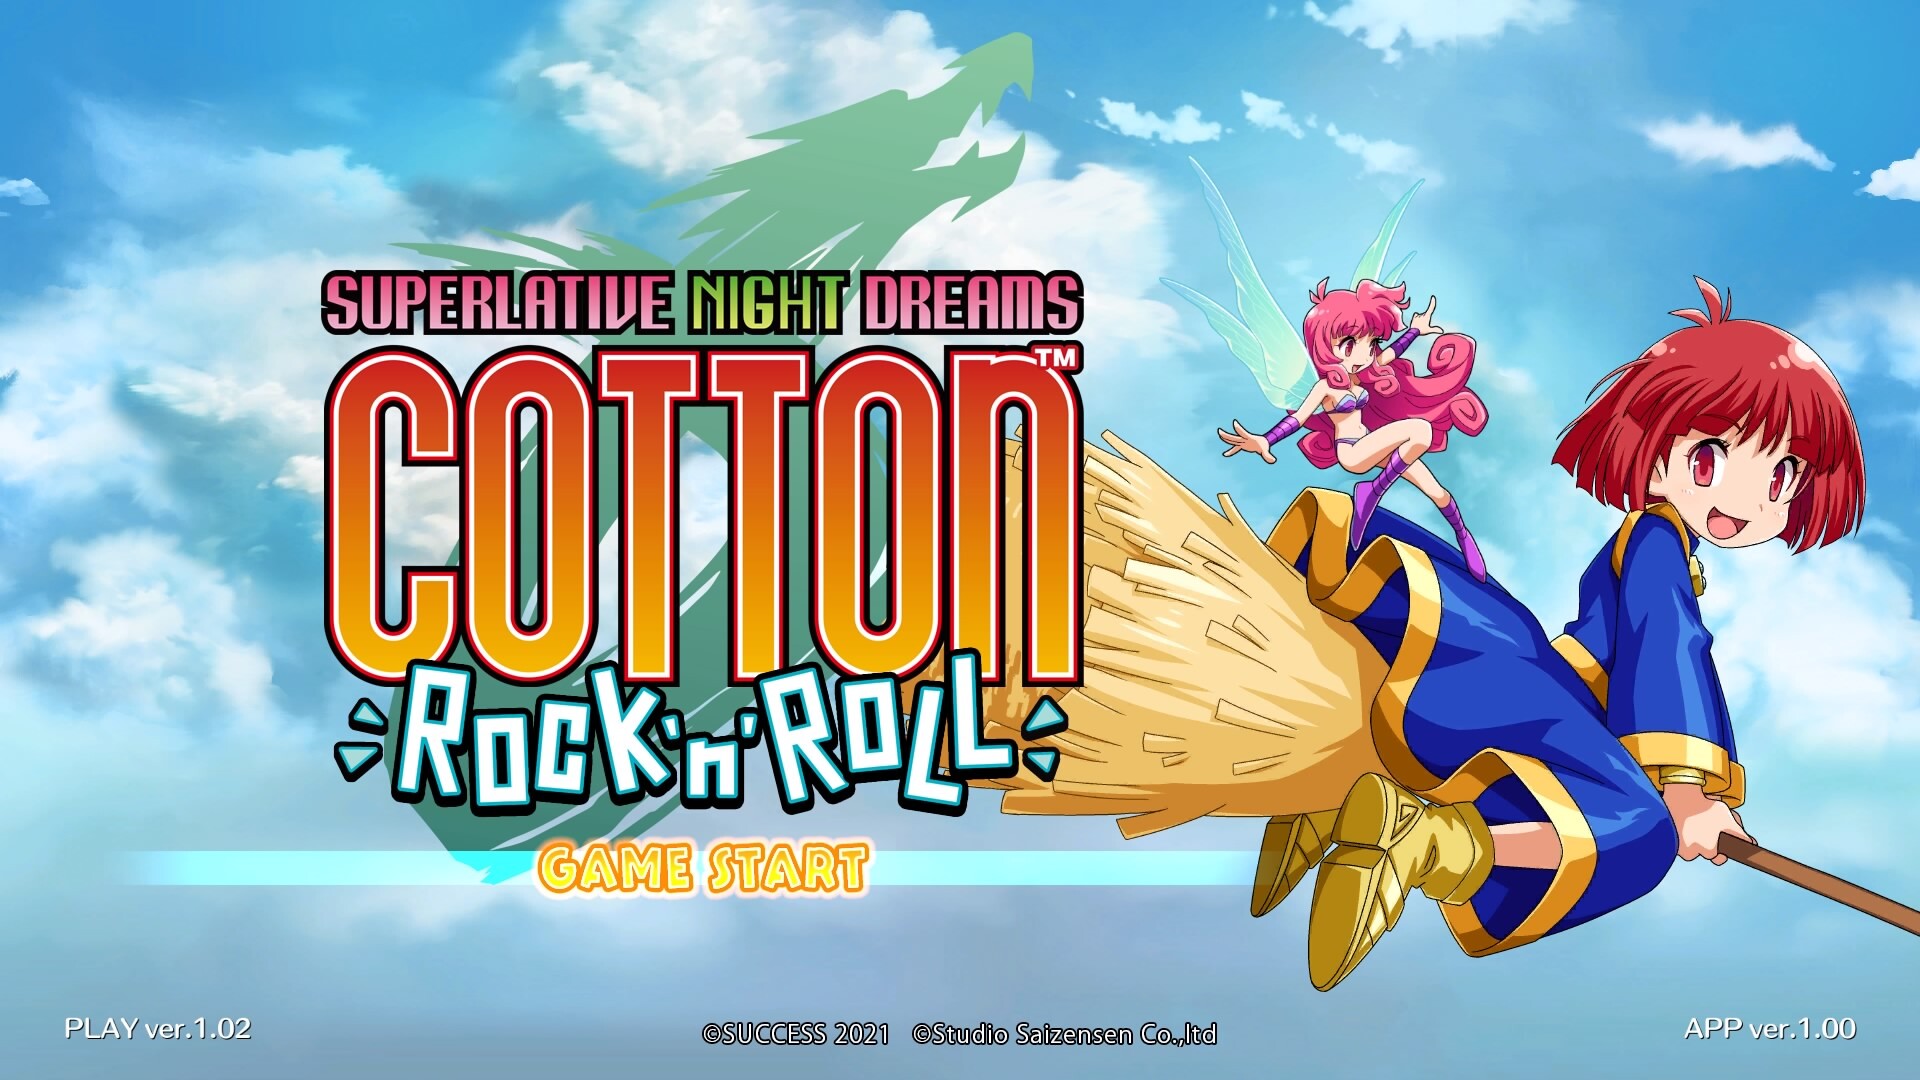 COTTOn Rock'n'Roll : SUPERLATIVE NIGHT DREAMS Steam CD Key 16.94 usd